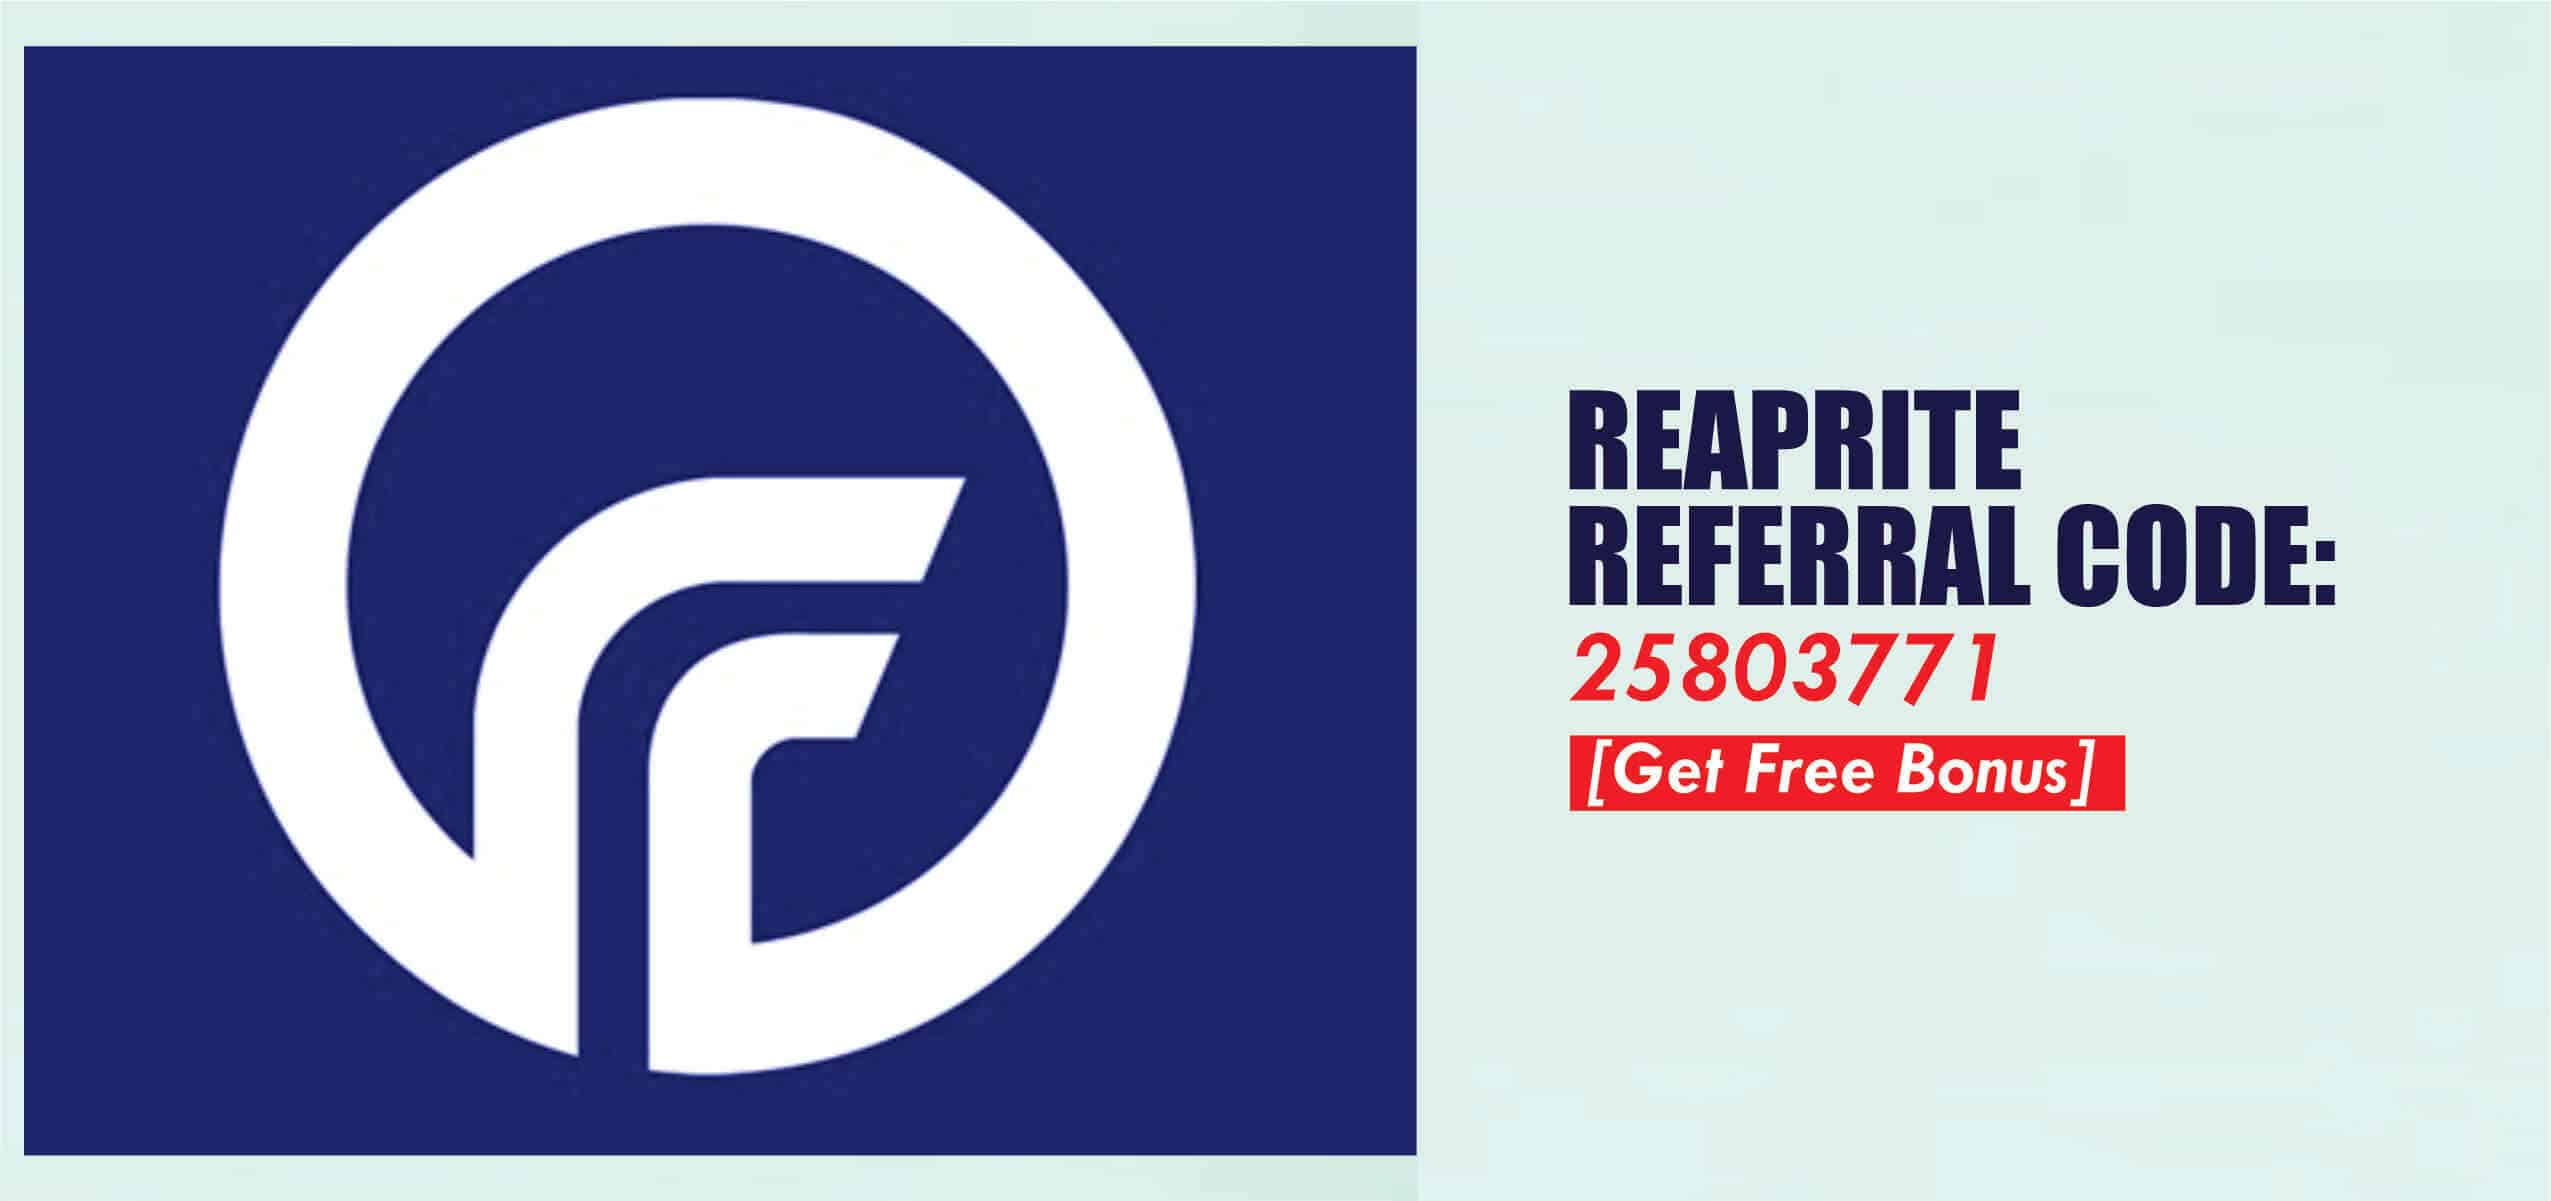 Reaprite referral code